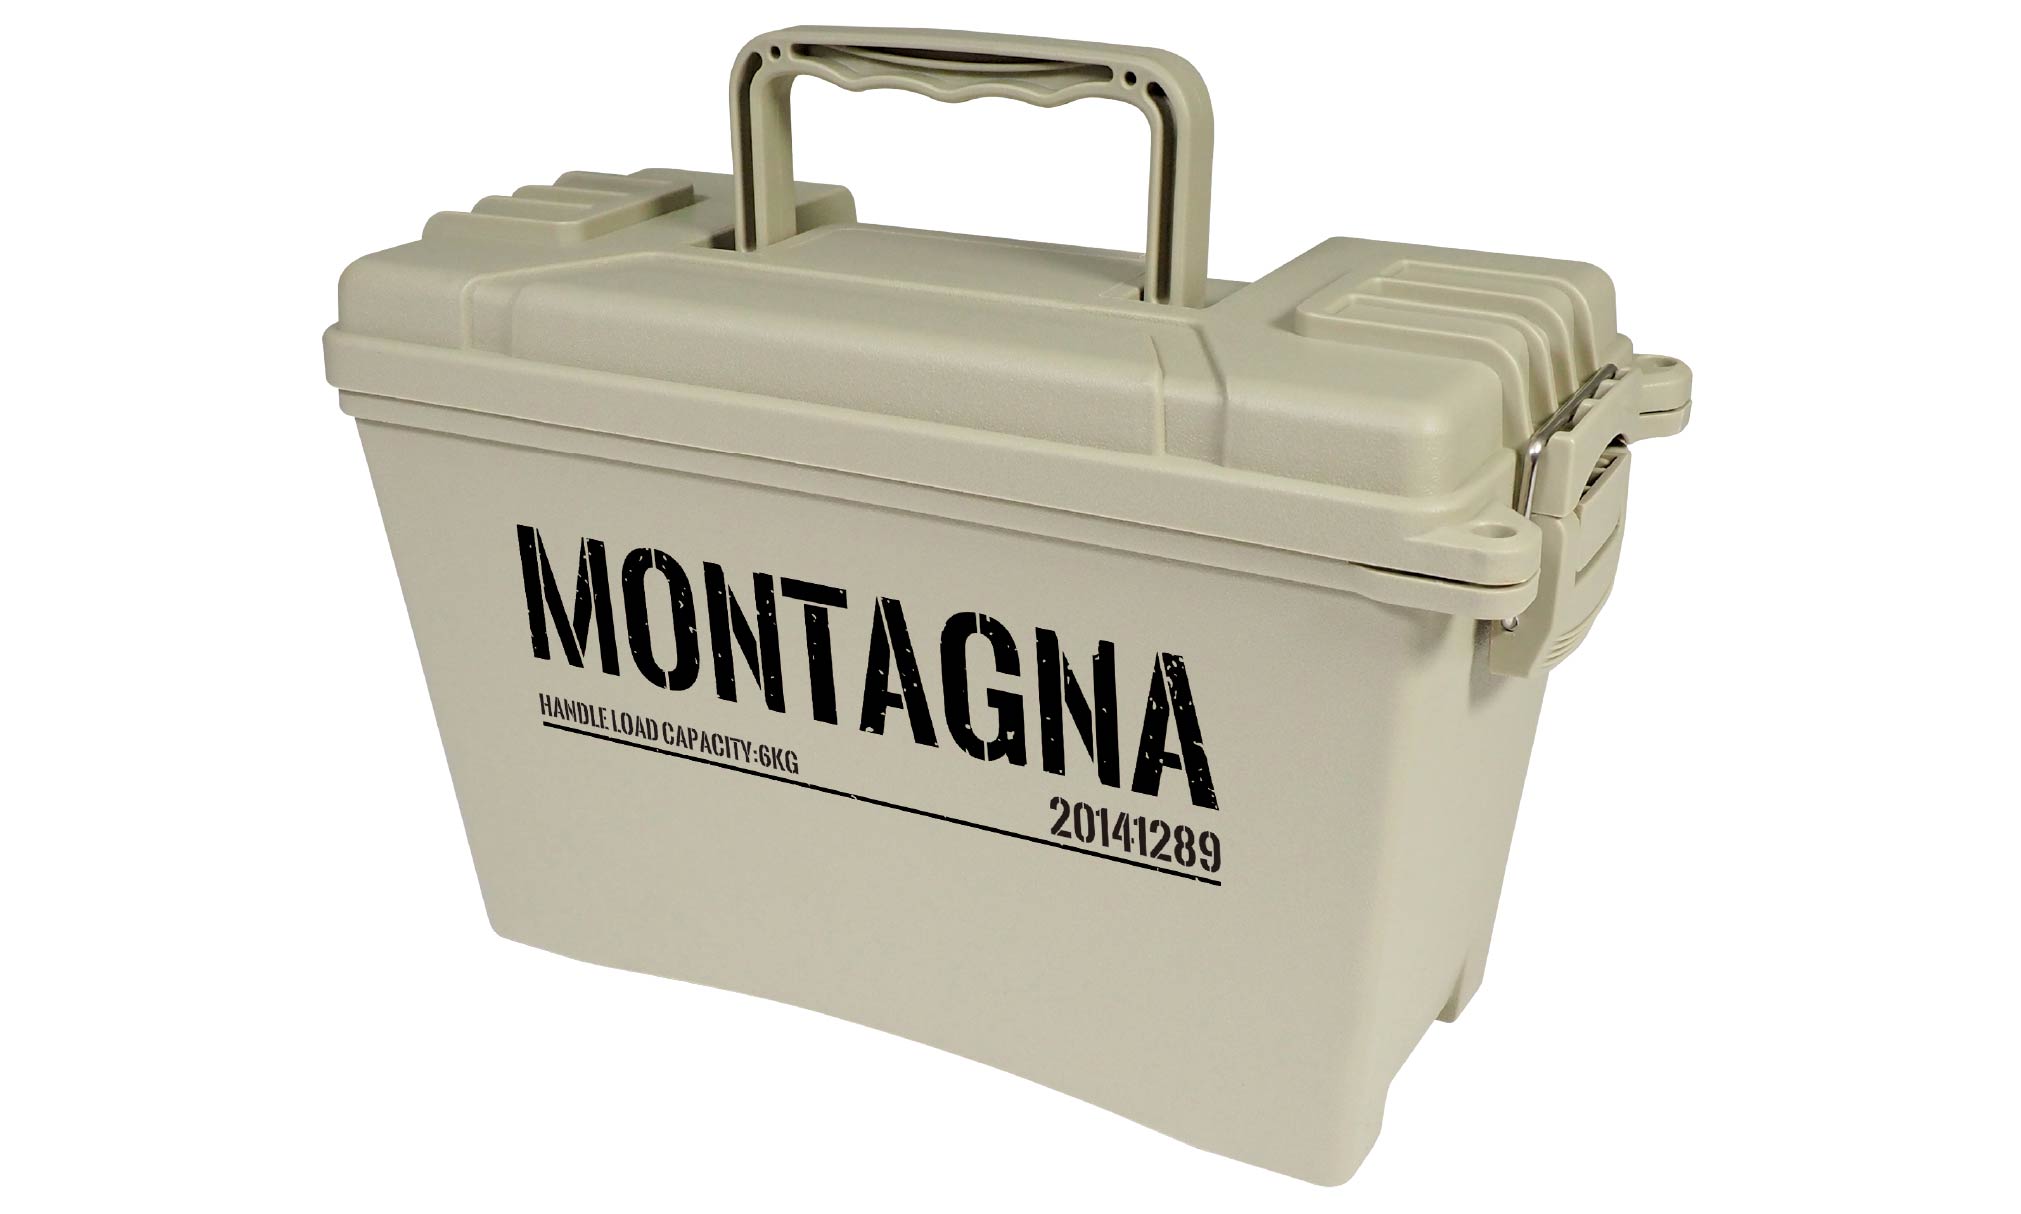 Montagna アウトドア ハードケース 収納箱 スタッキング可能  工具箱  3806